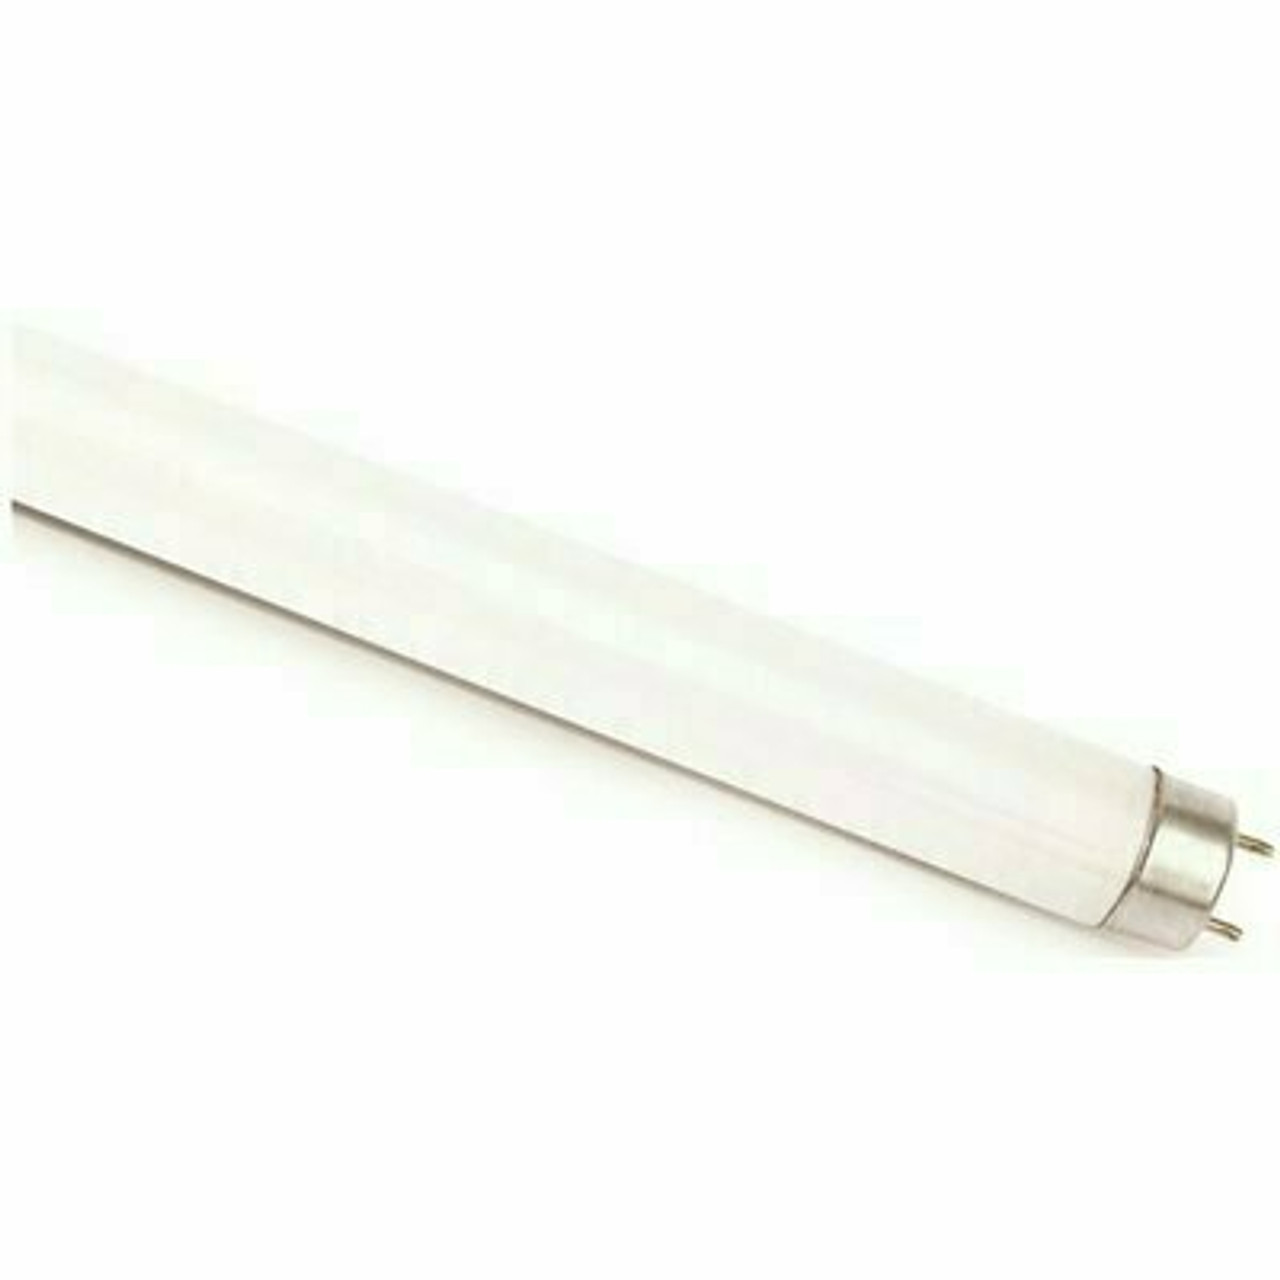 Sylvania Sylvania Preheat Linear Fluorescent Lamp, T8, 15 Watts, 4200K, 60 Cri, Medium Bipin, 20 In.